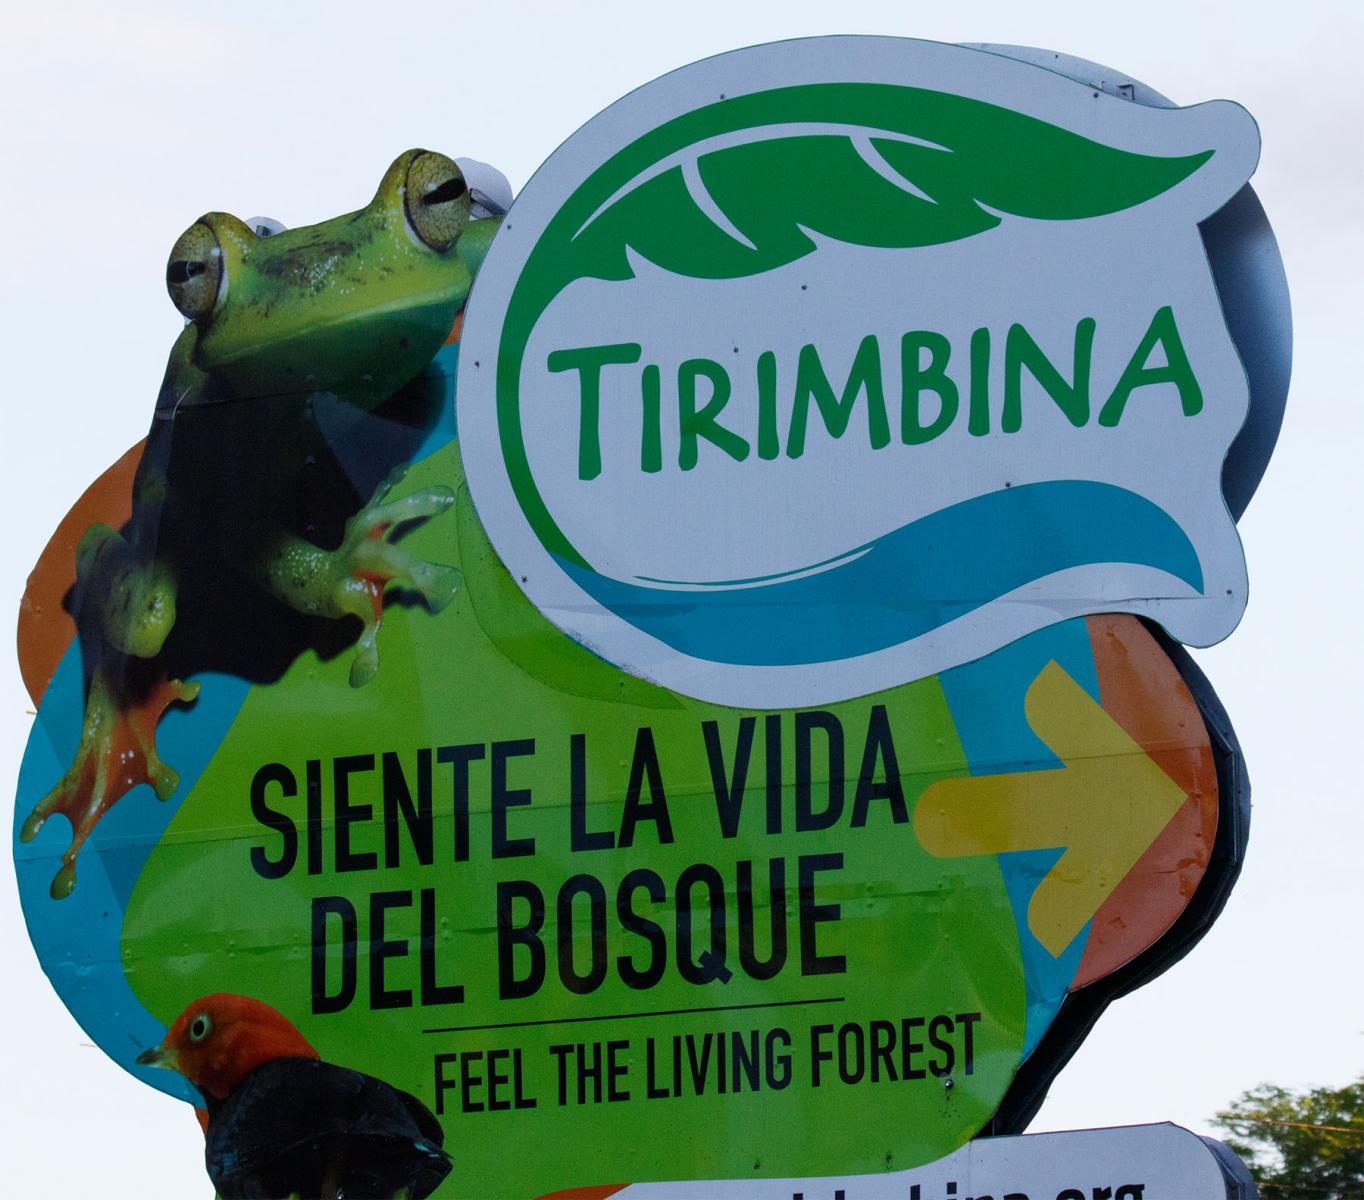 Tirimbina Biological Reserve, La Virgen, Costa Rica